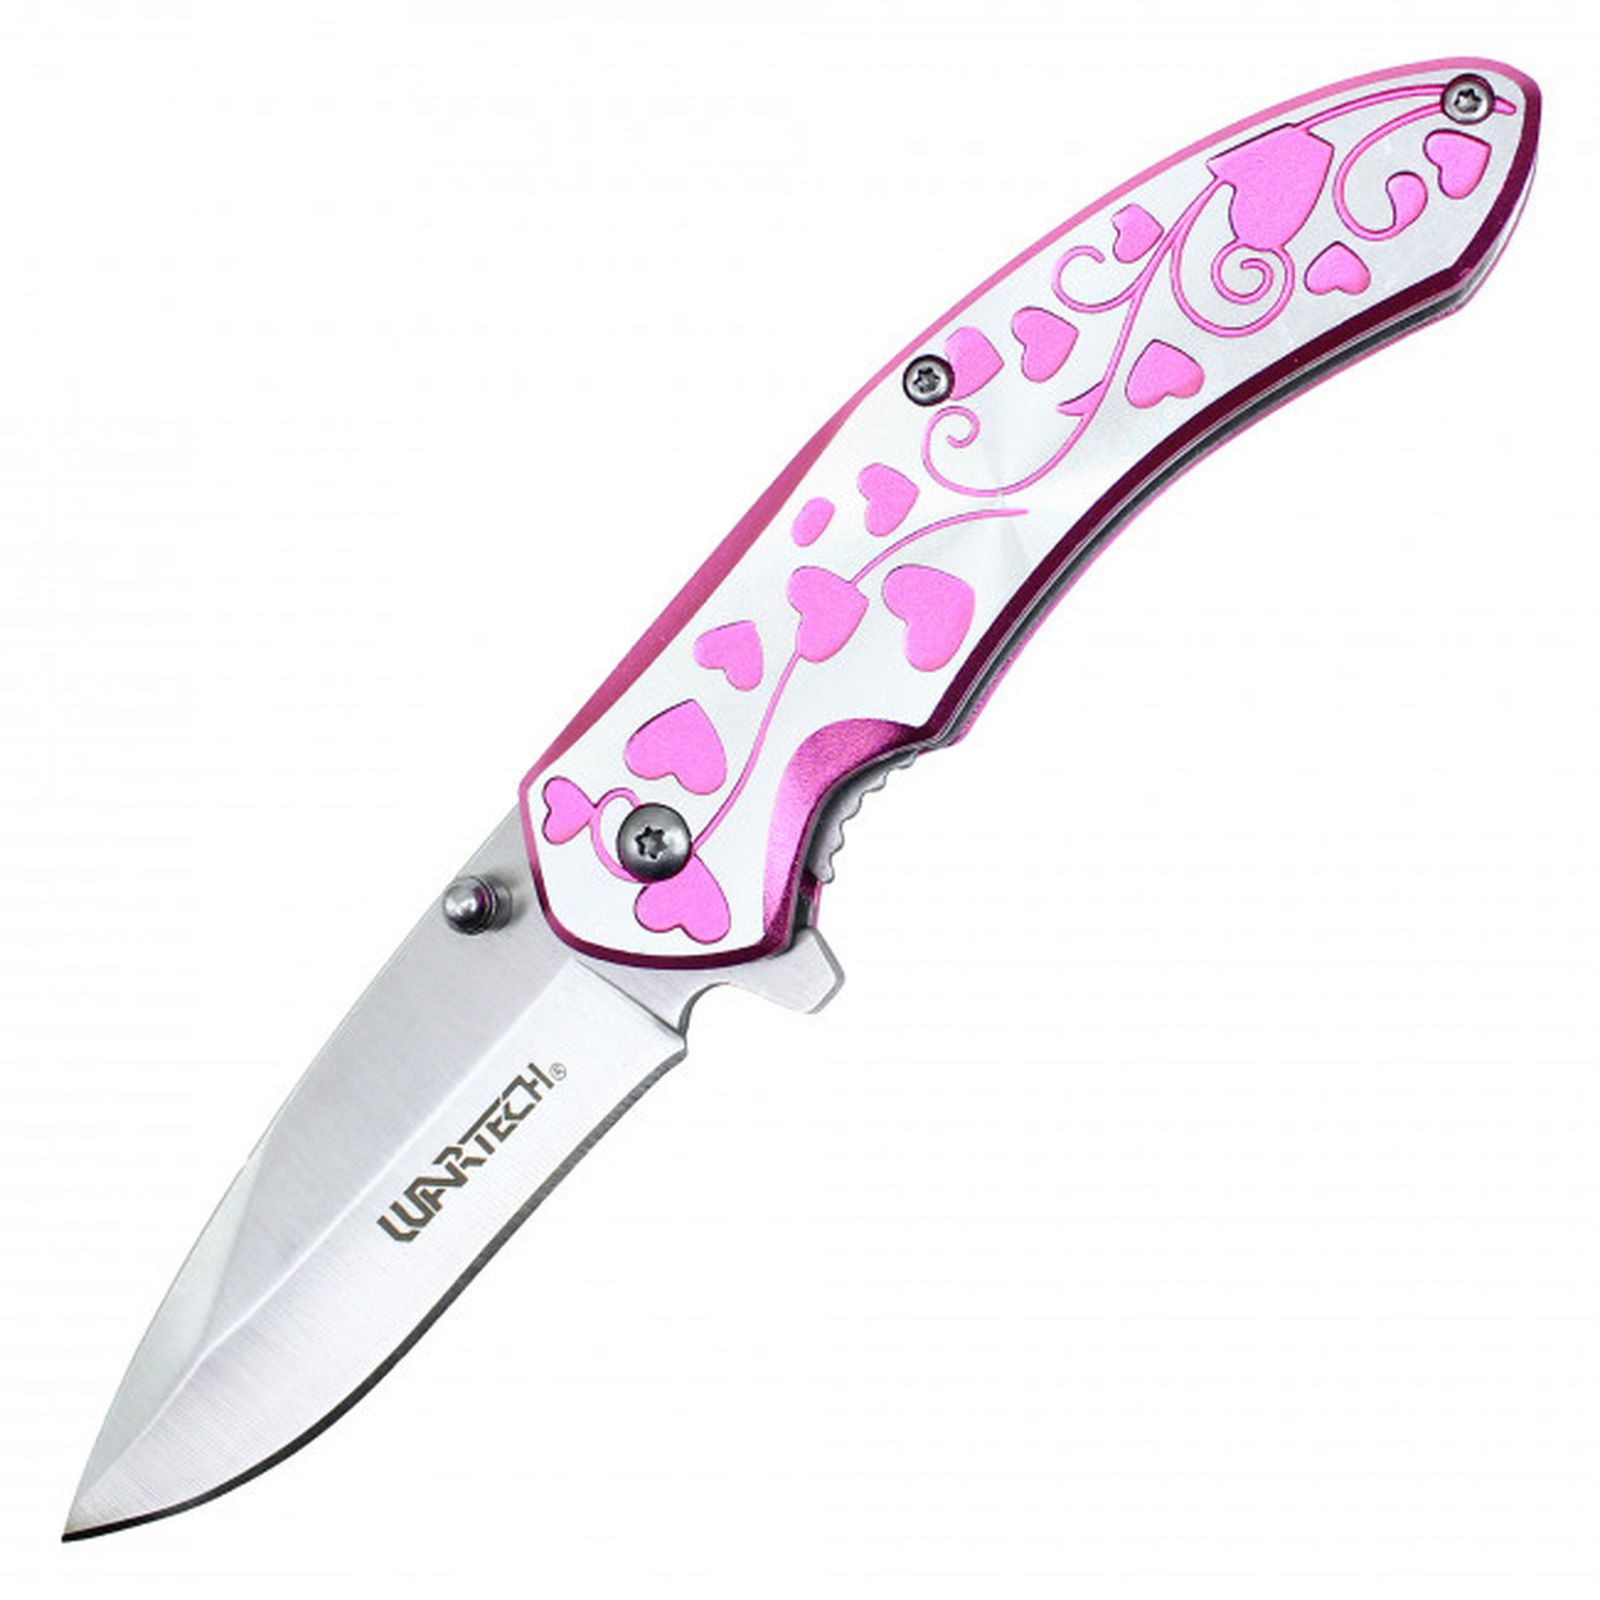 Spring-Assist Folding Knife | Wartech Pink Silver Hearts Vine 3in. Blade EDC